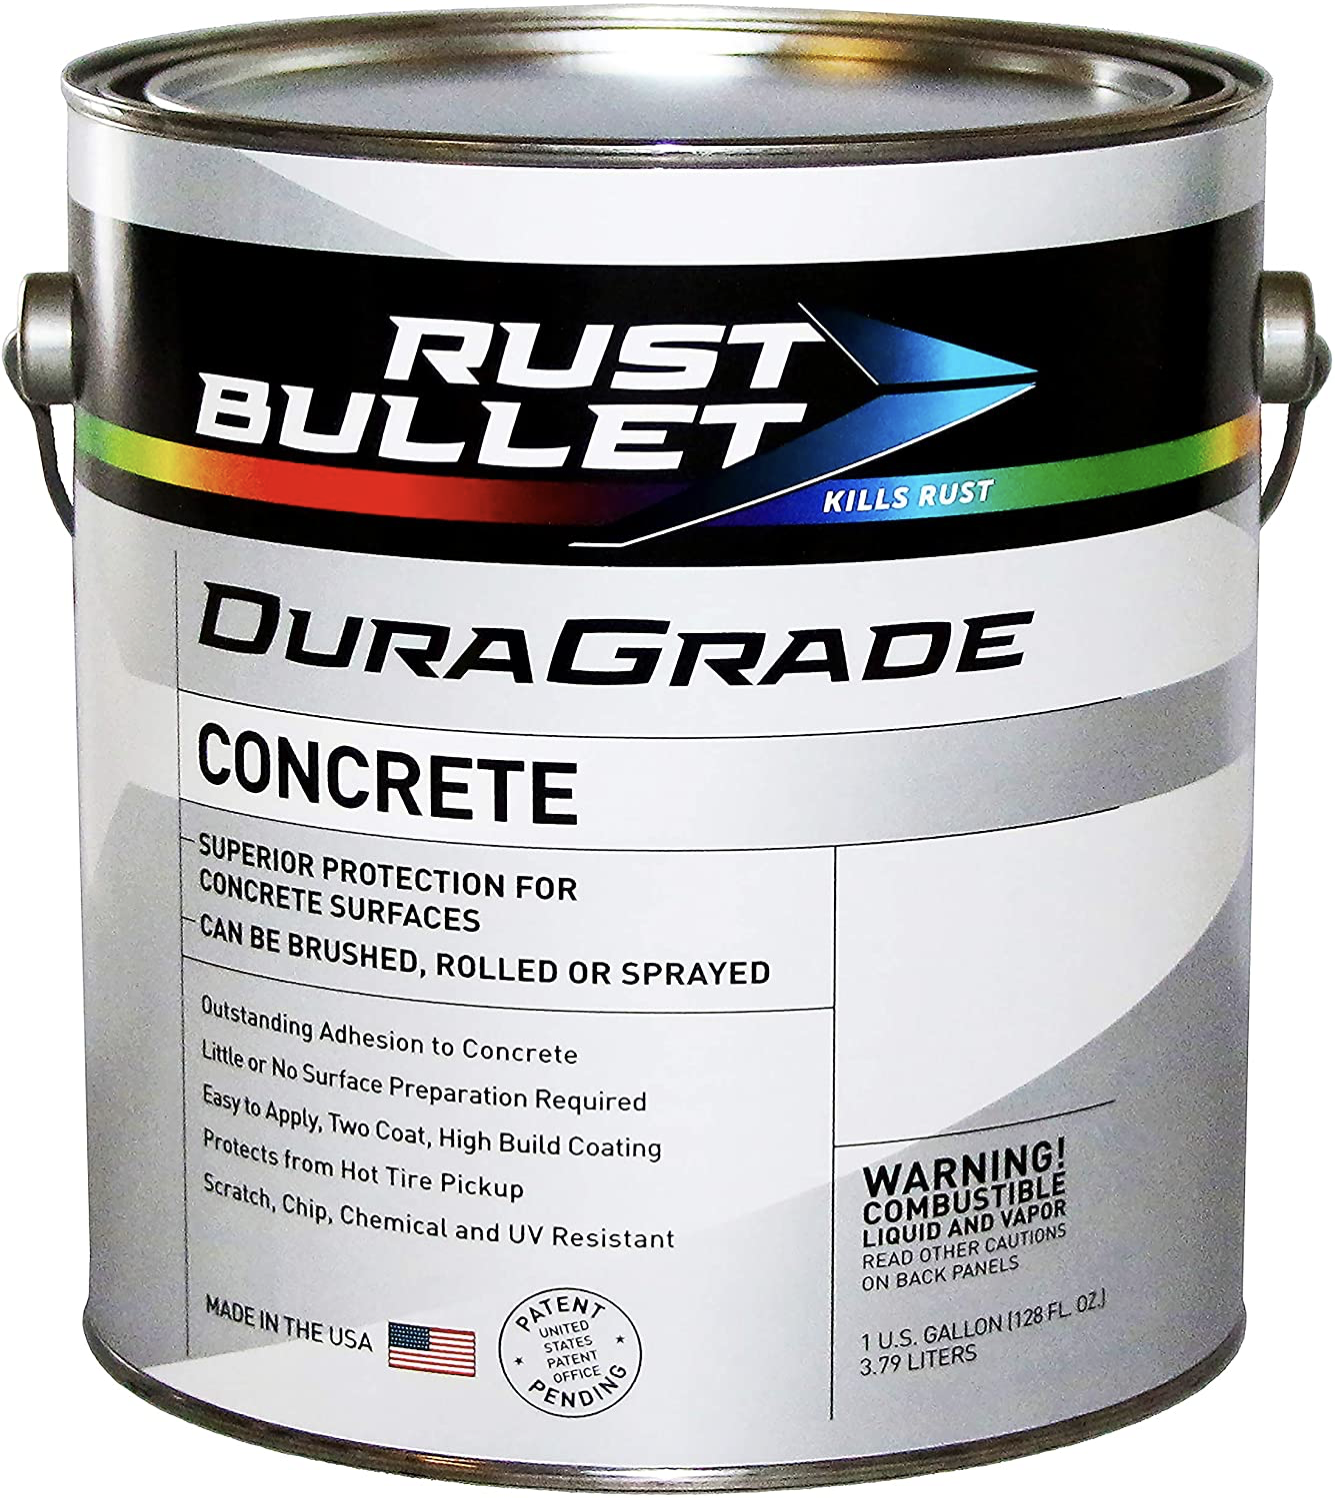 Rust Bullet DuraGrade Concrete Concrete Coating